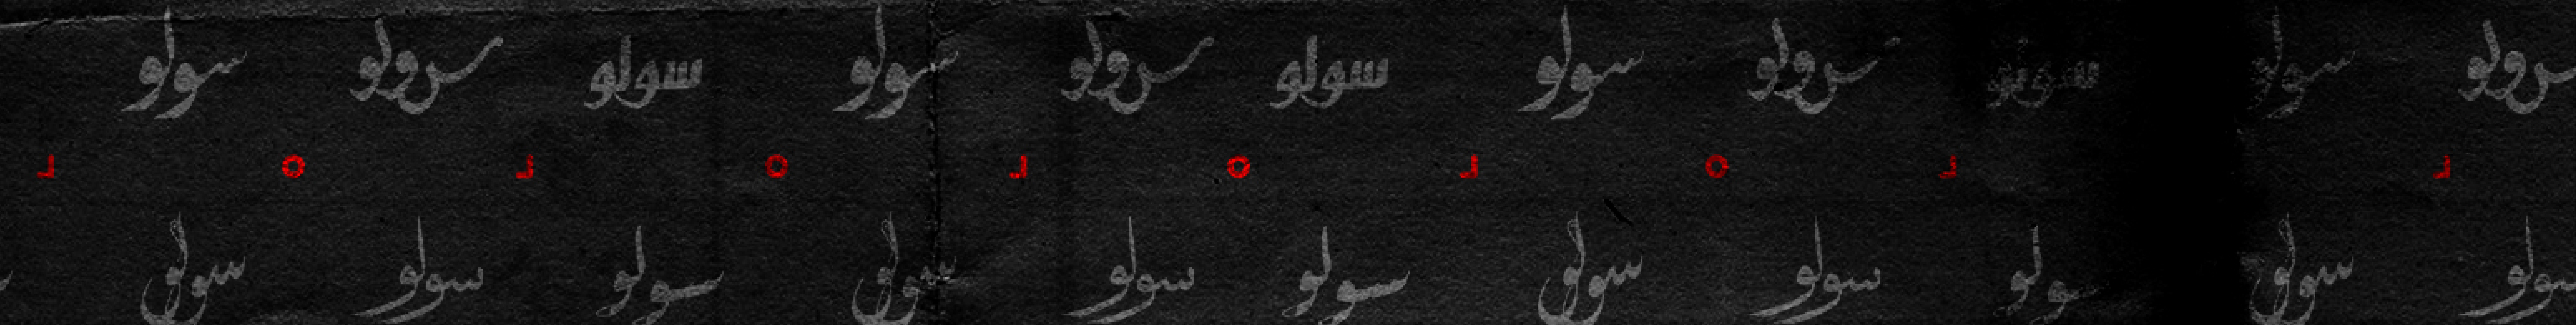 Hussein H. Abul Ma'ali profil başlığı